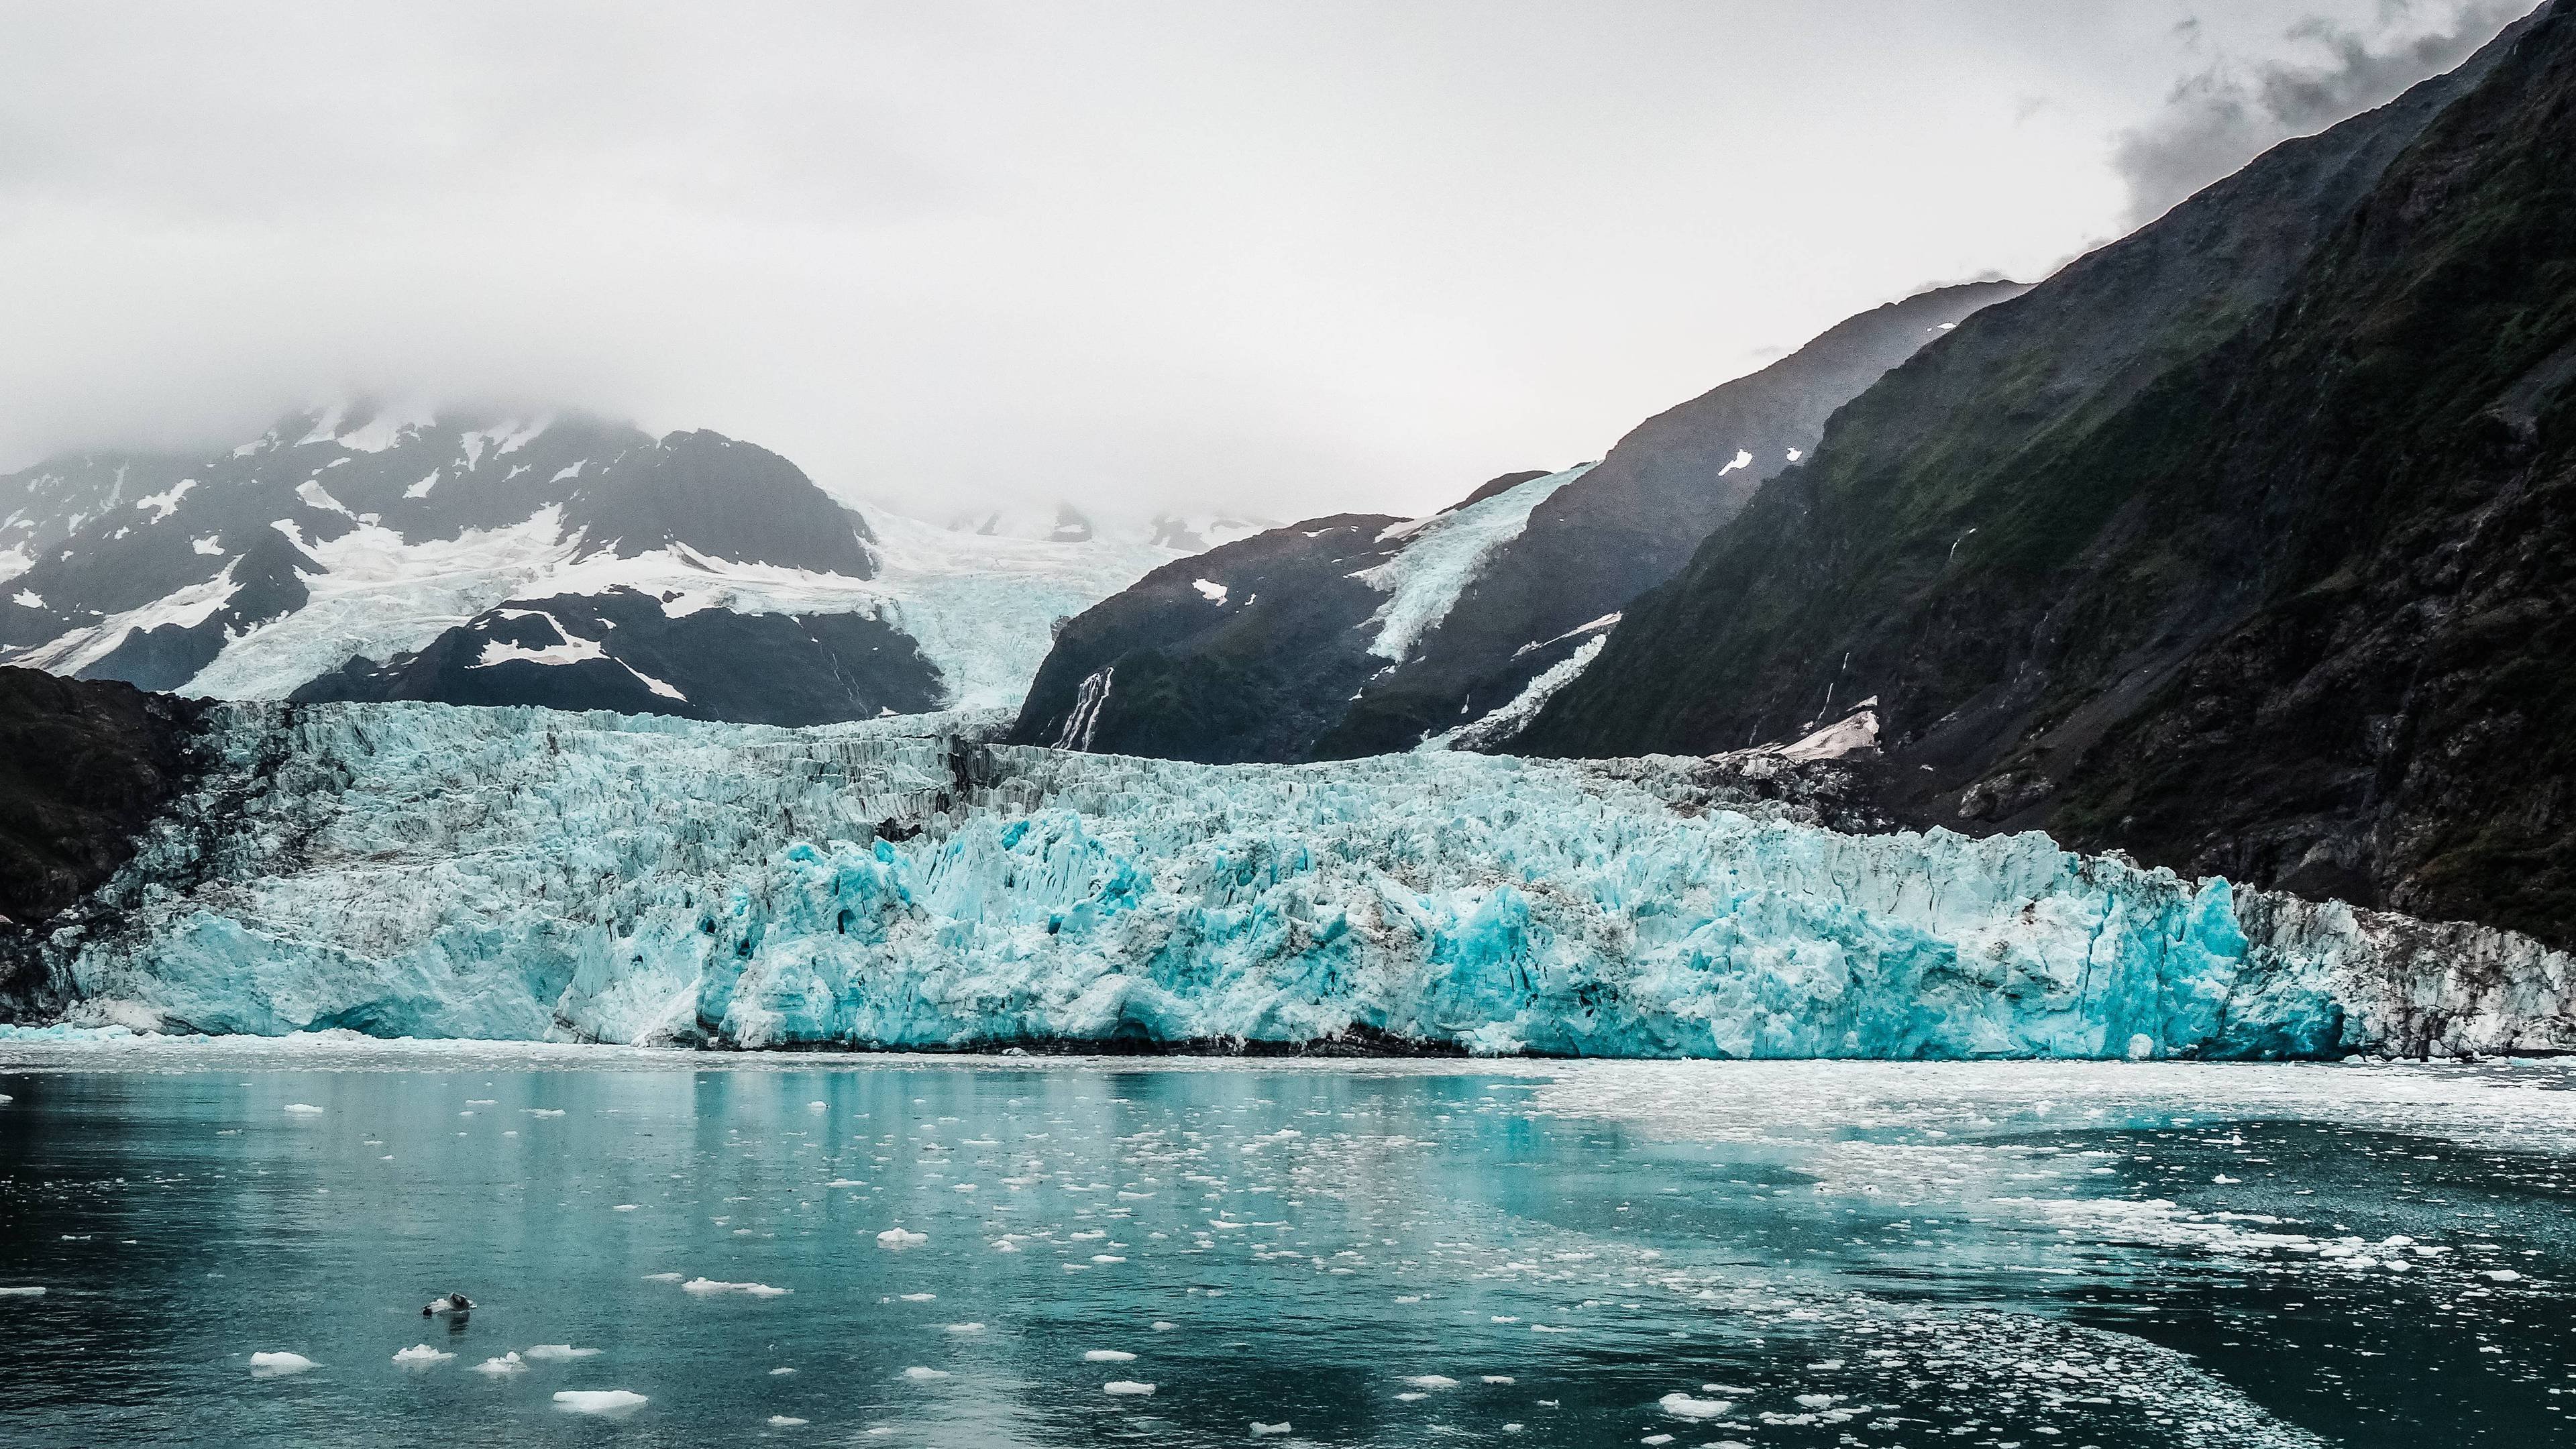 500 Stunning Alaska Pictures HD  Download Free Images on Unsplash